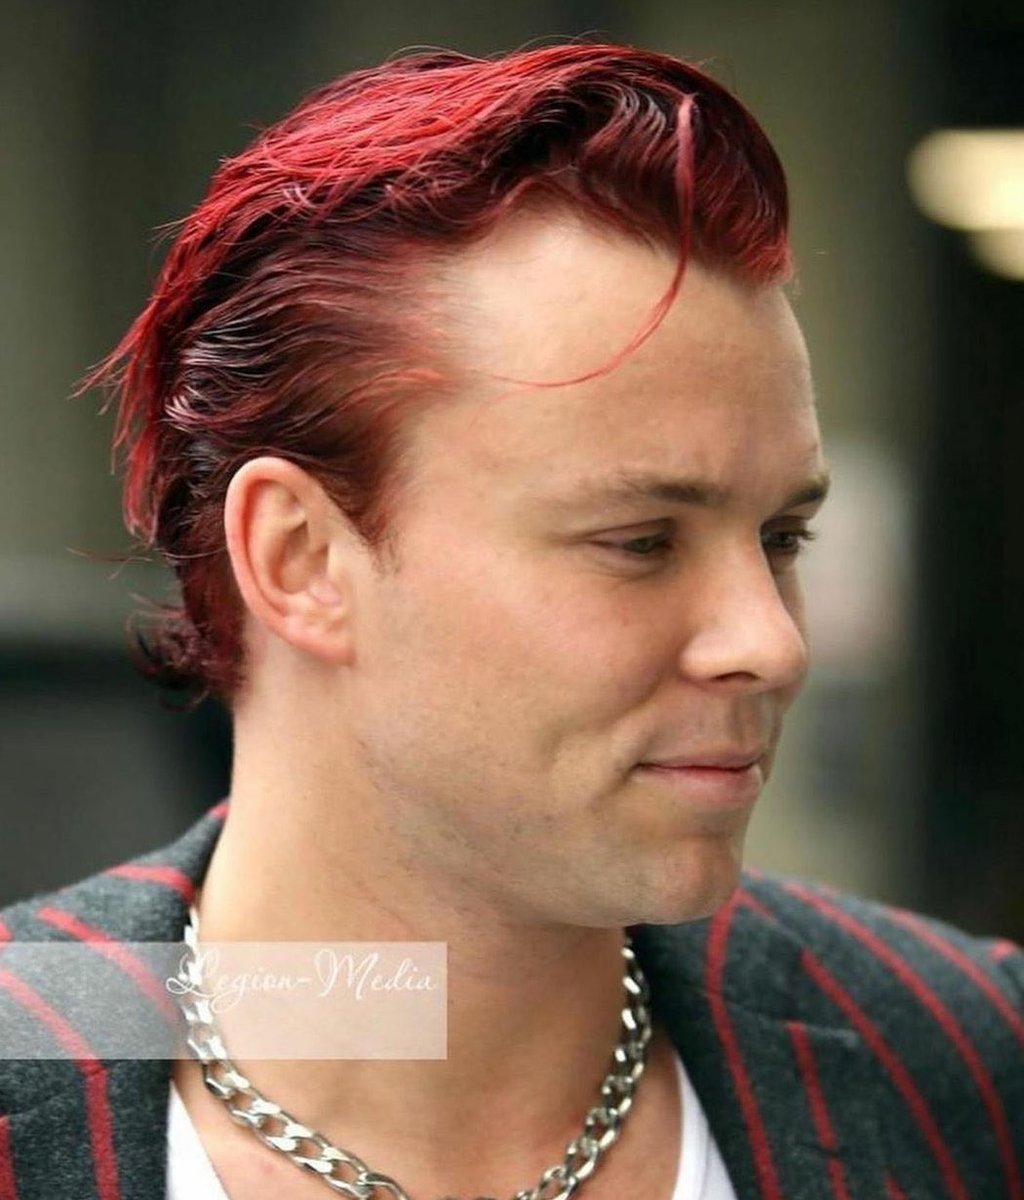 Ashton with single strand of hair on his forehead, a thread